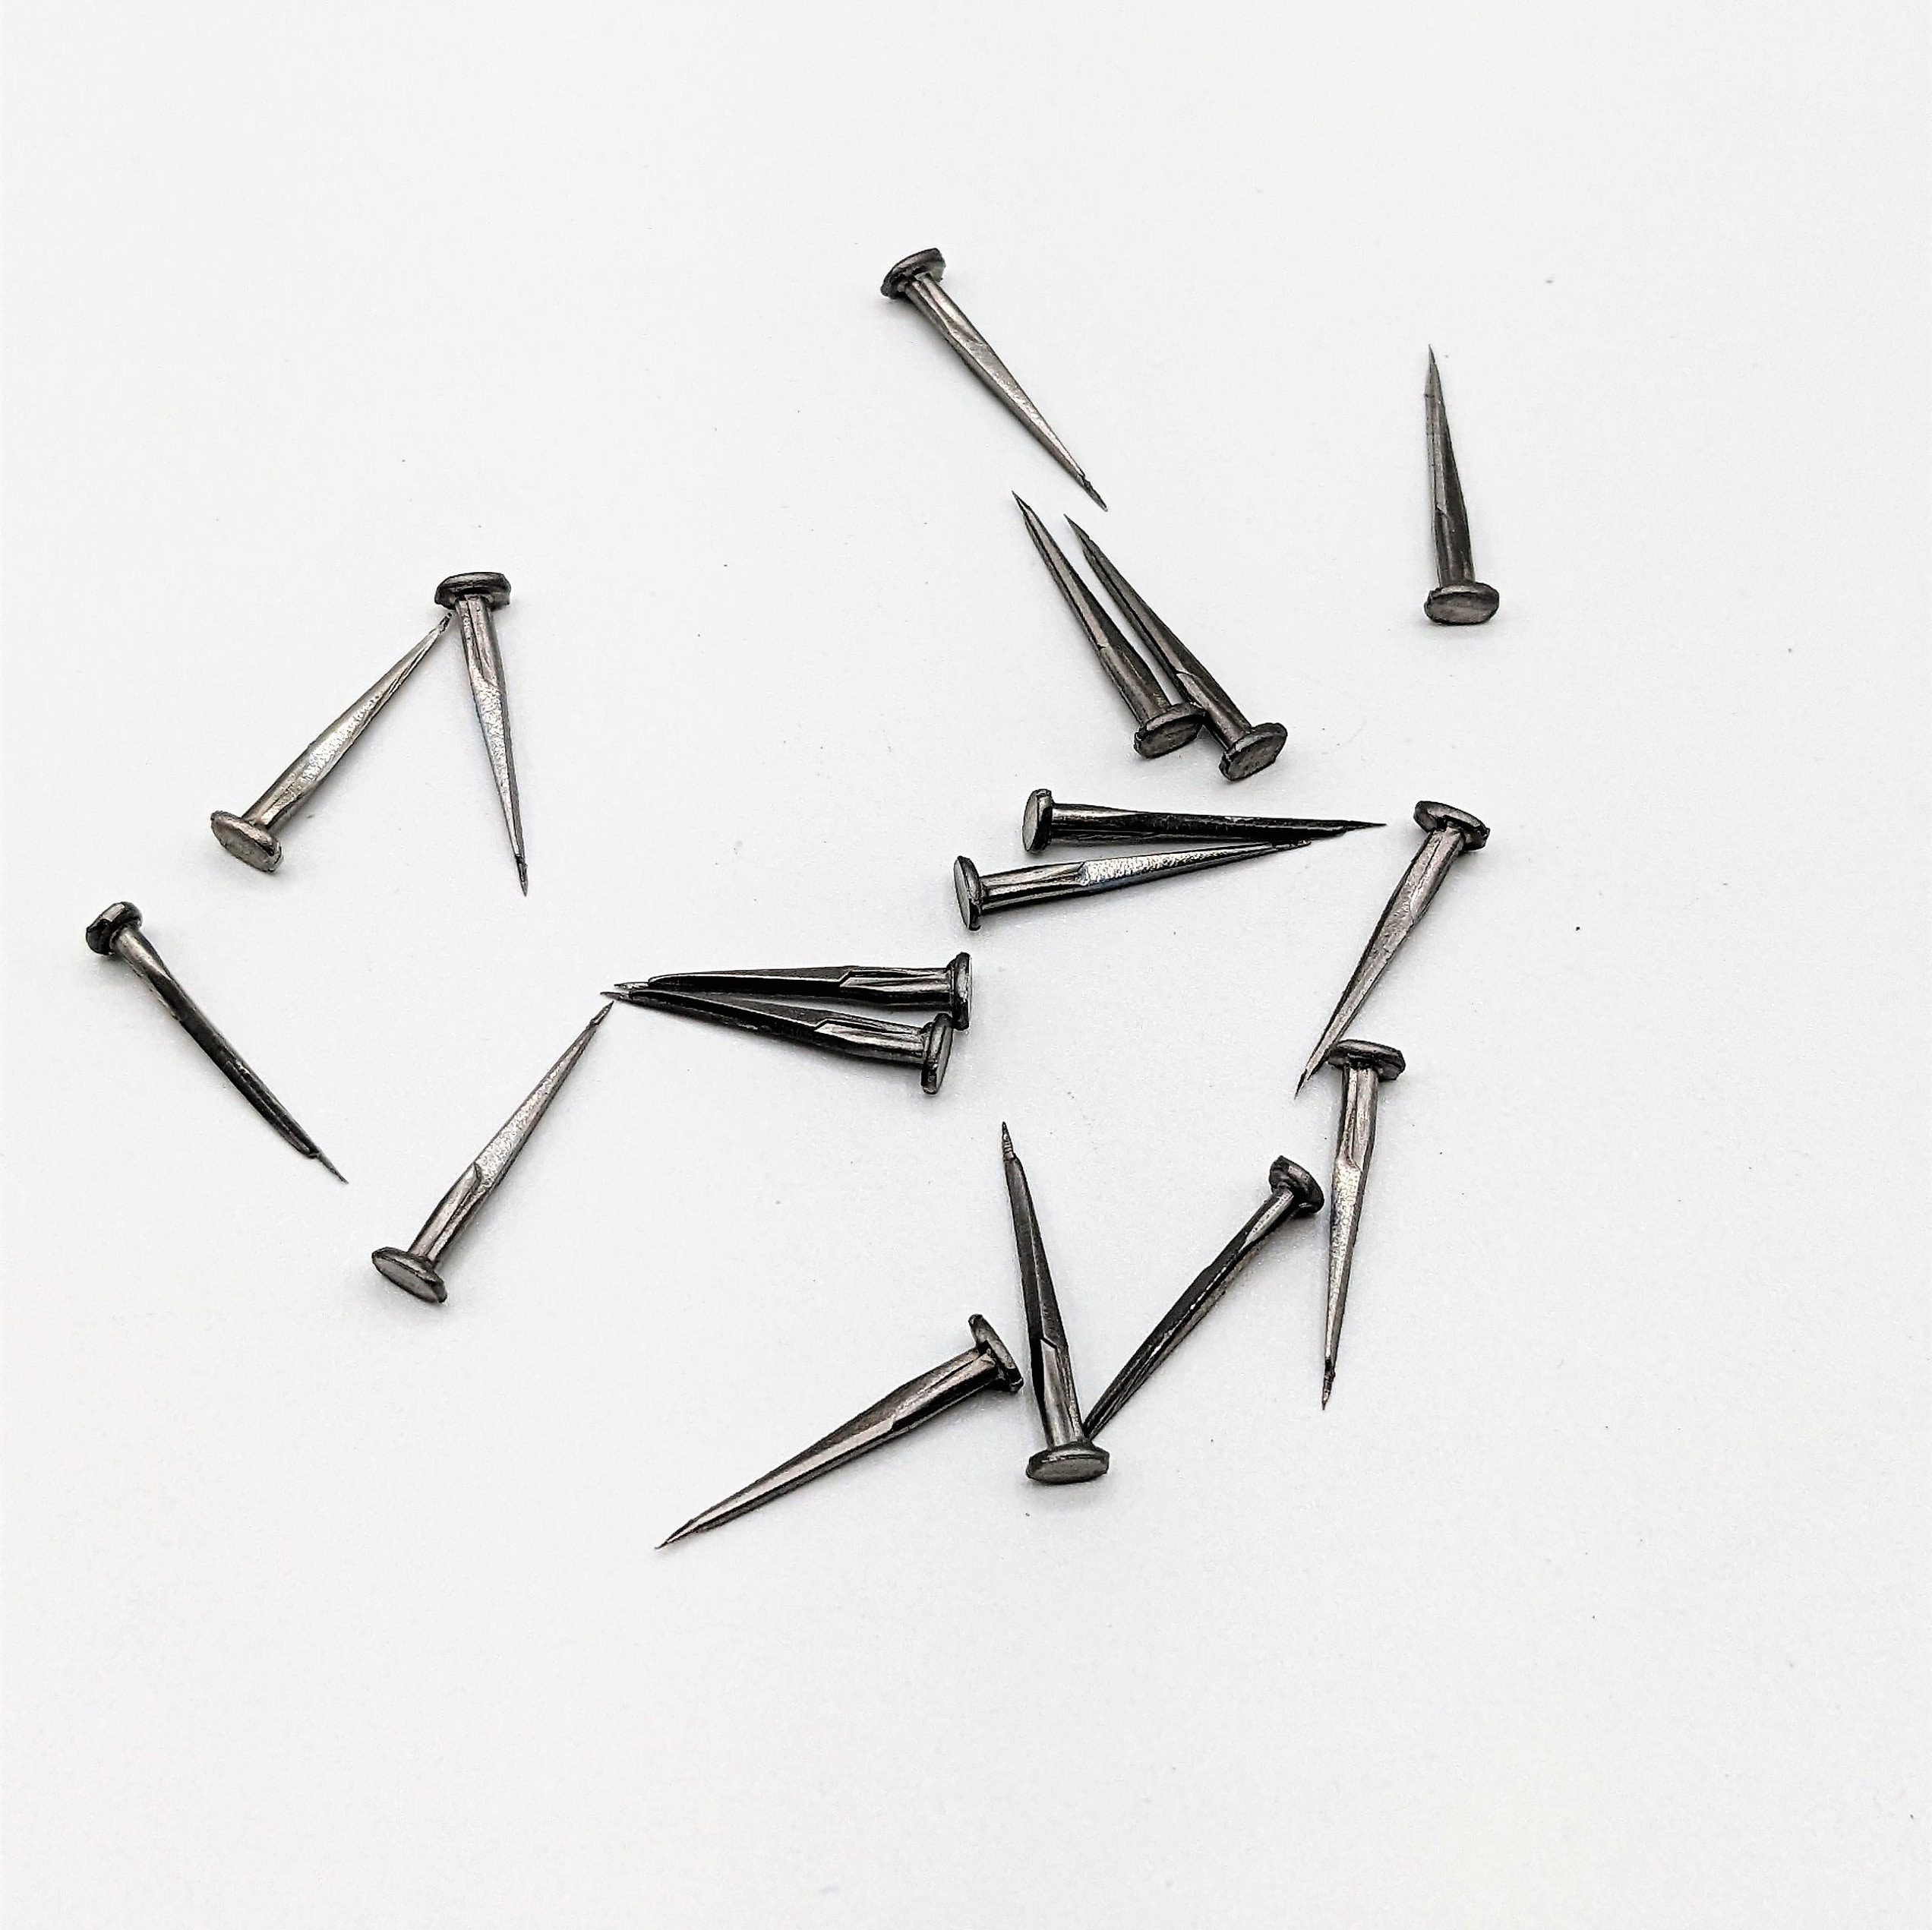 300x Brass NailsSmall 10mm Pins Round Head Shoe Repair Hobby Wall Hanging 